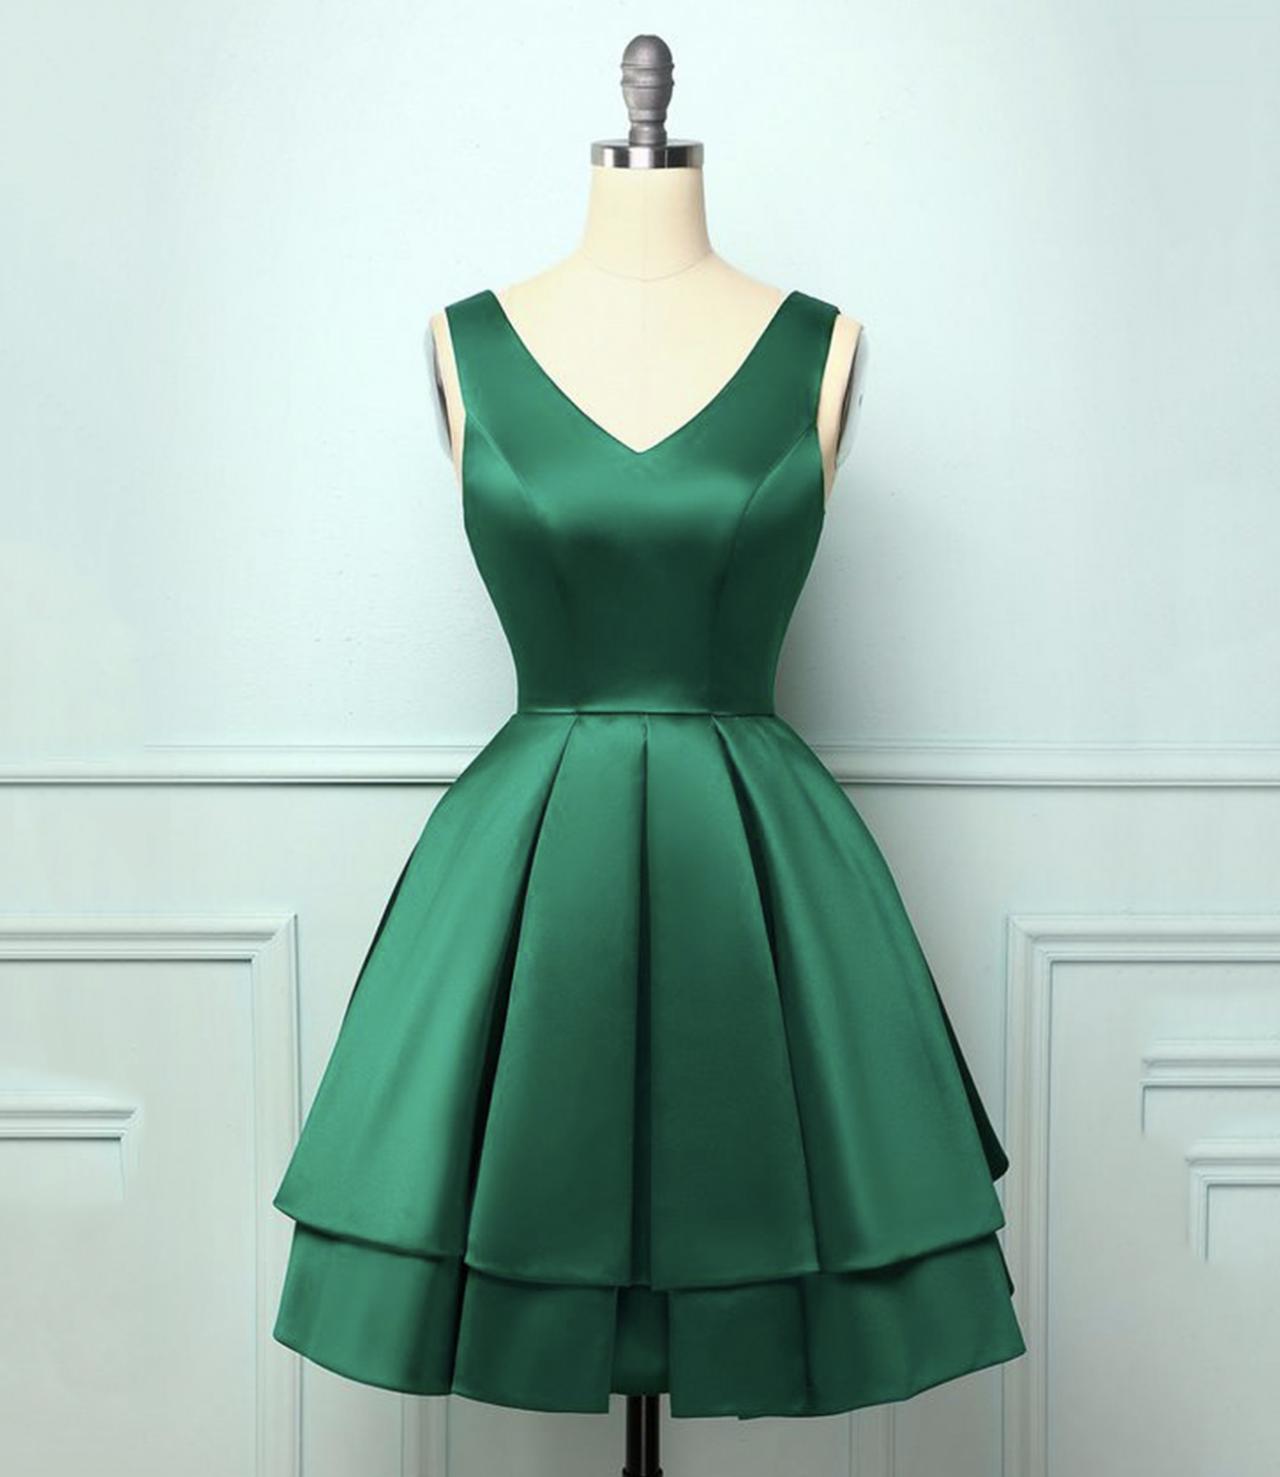 Green Satin Short Prom Dress Homecoming Dress